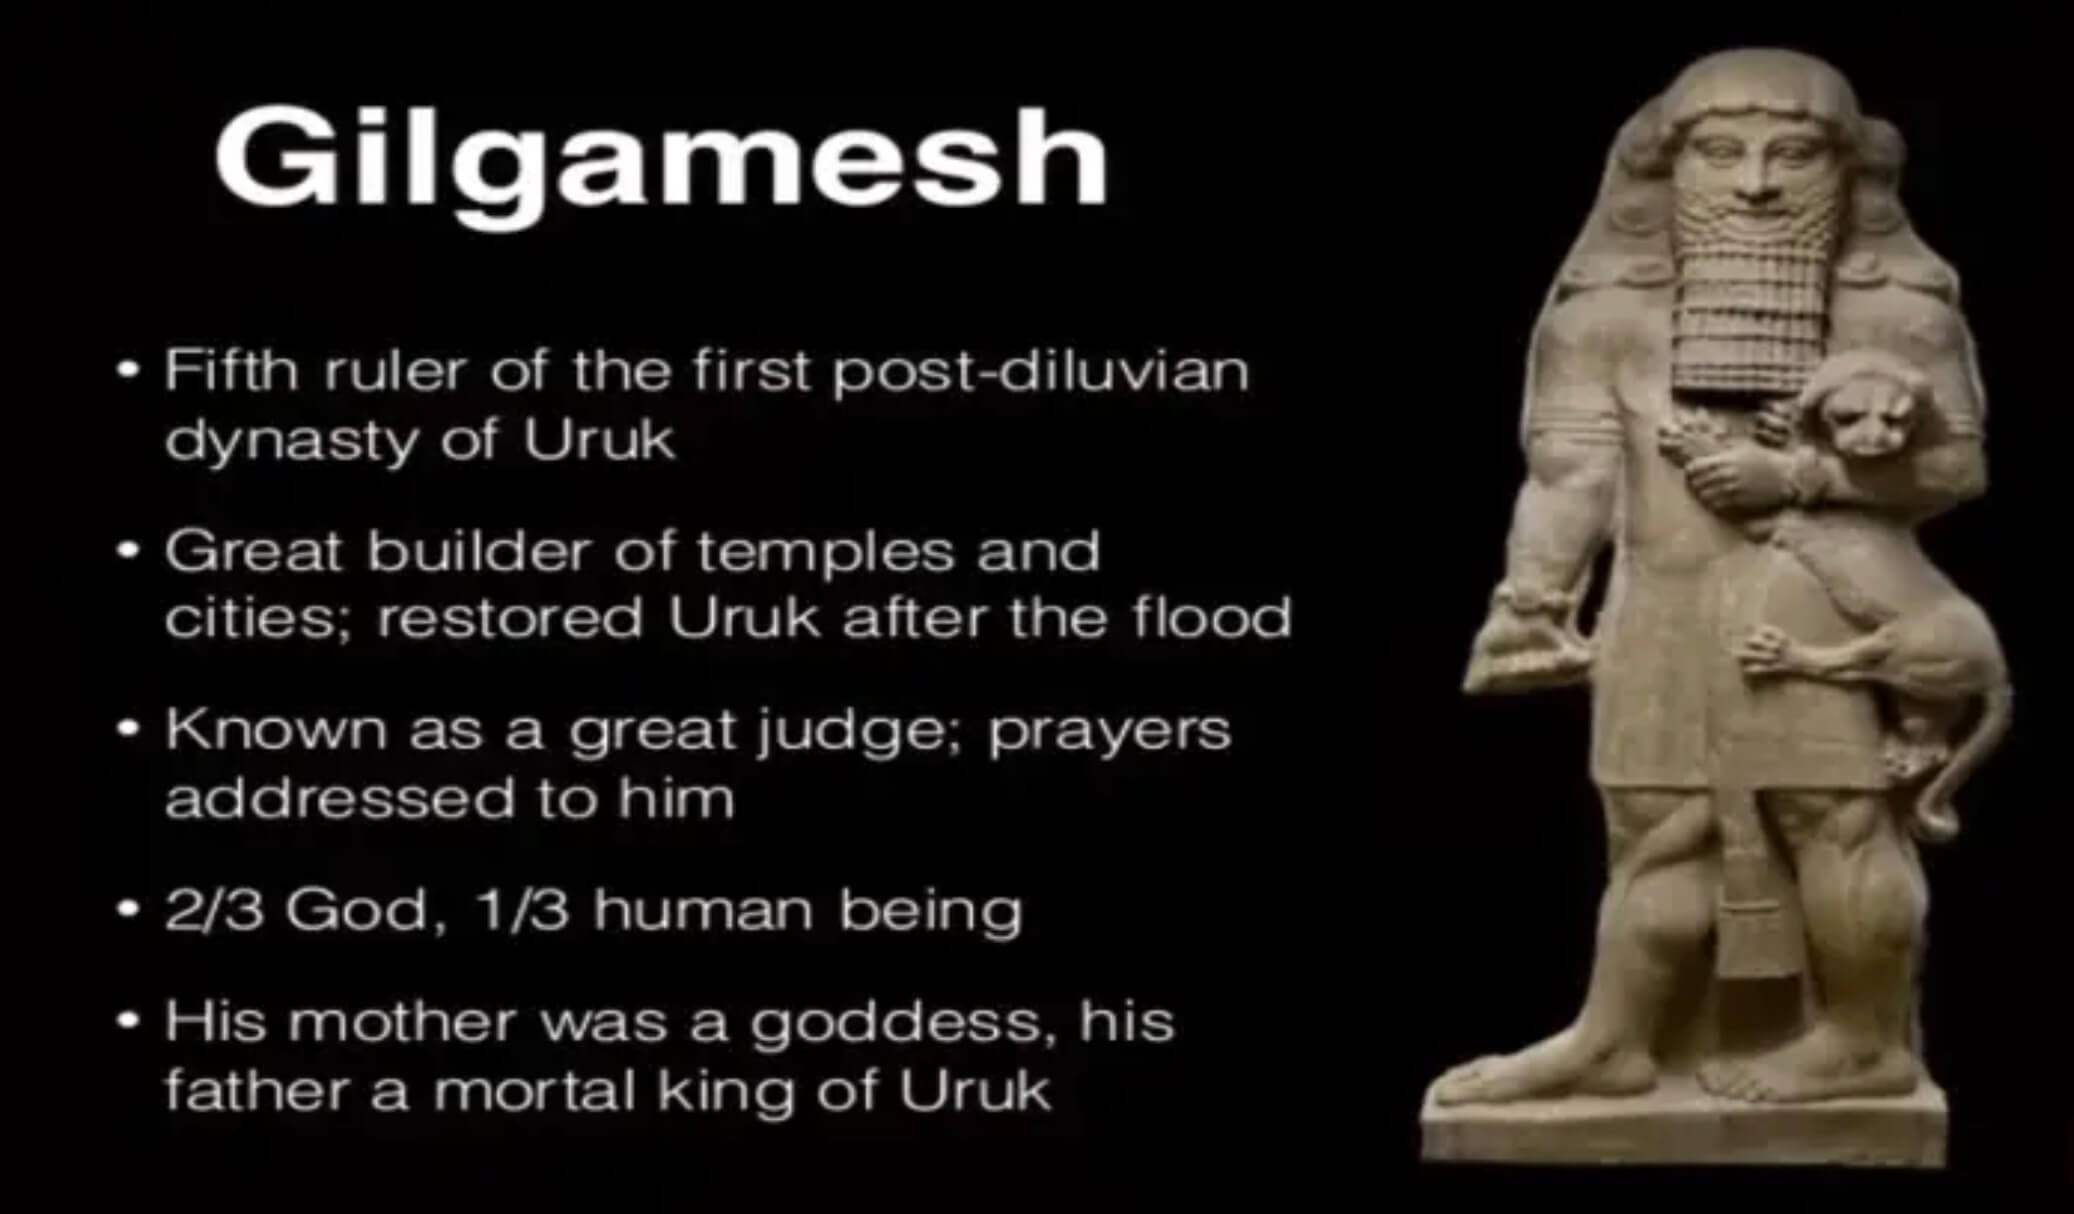 A few Gilgamesh facts. 